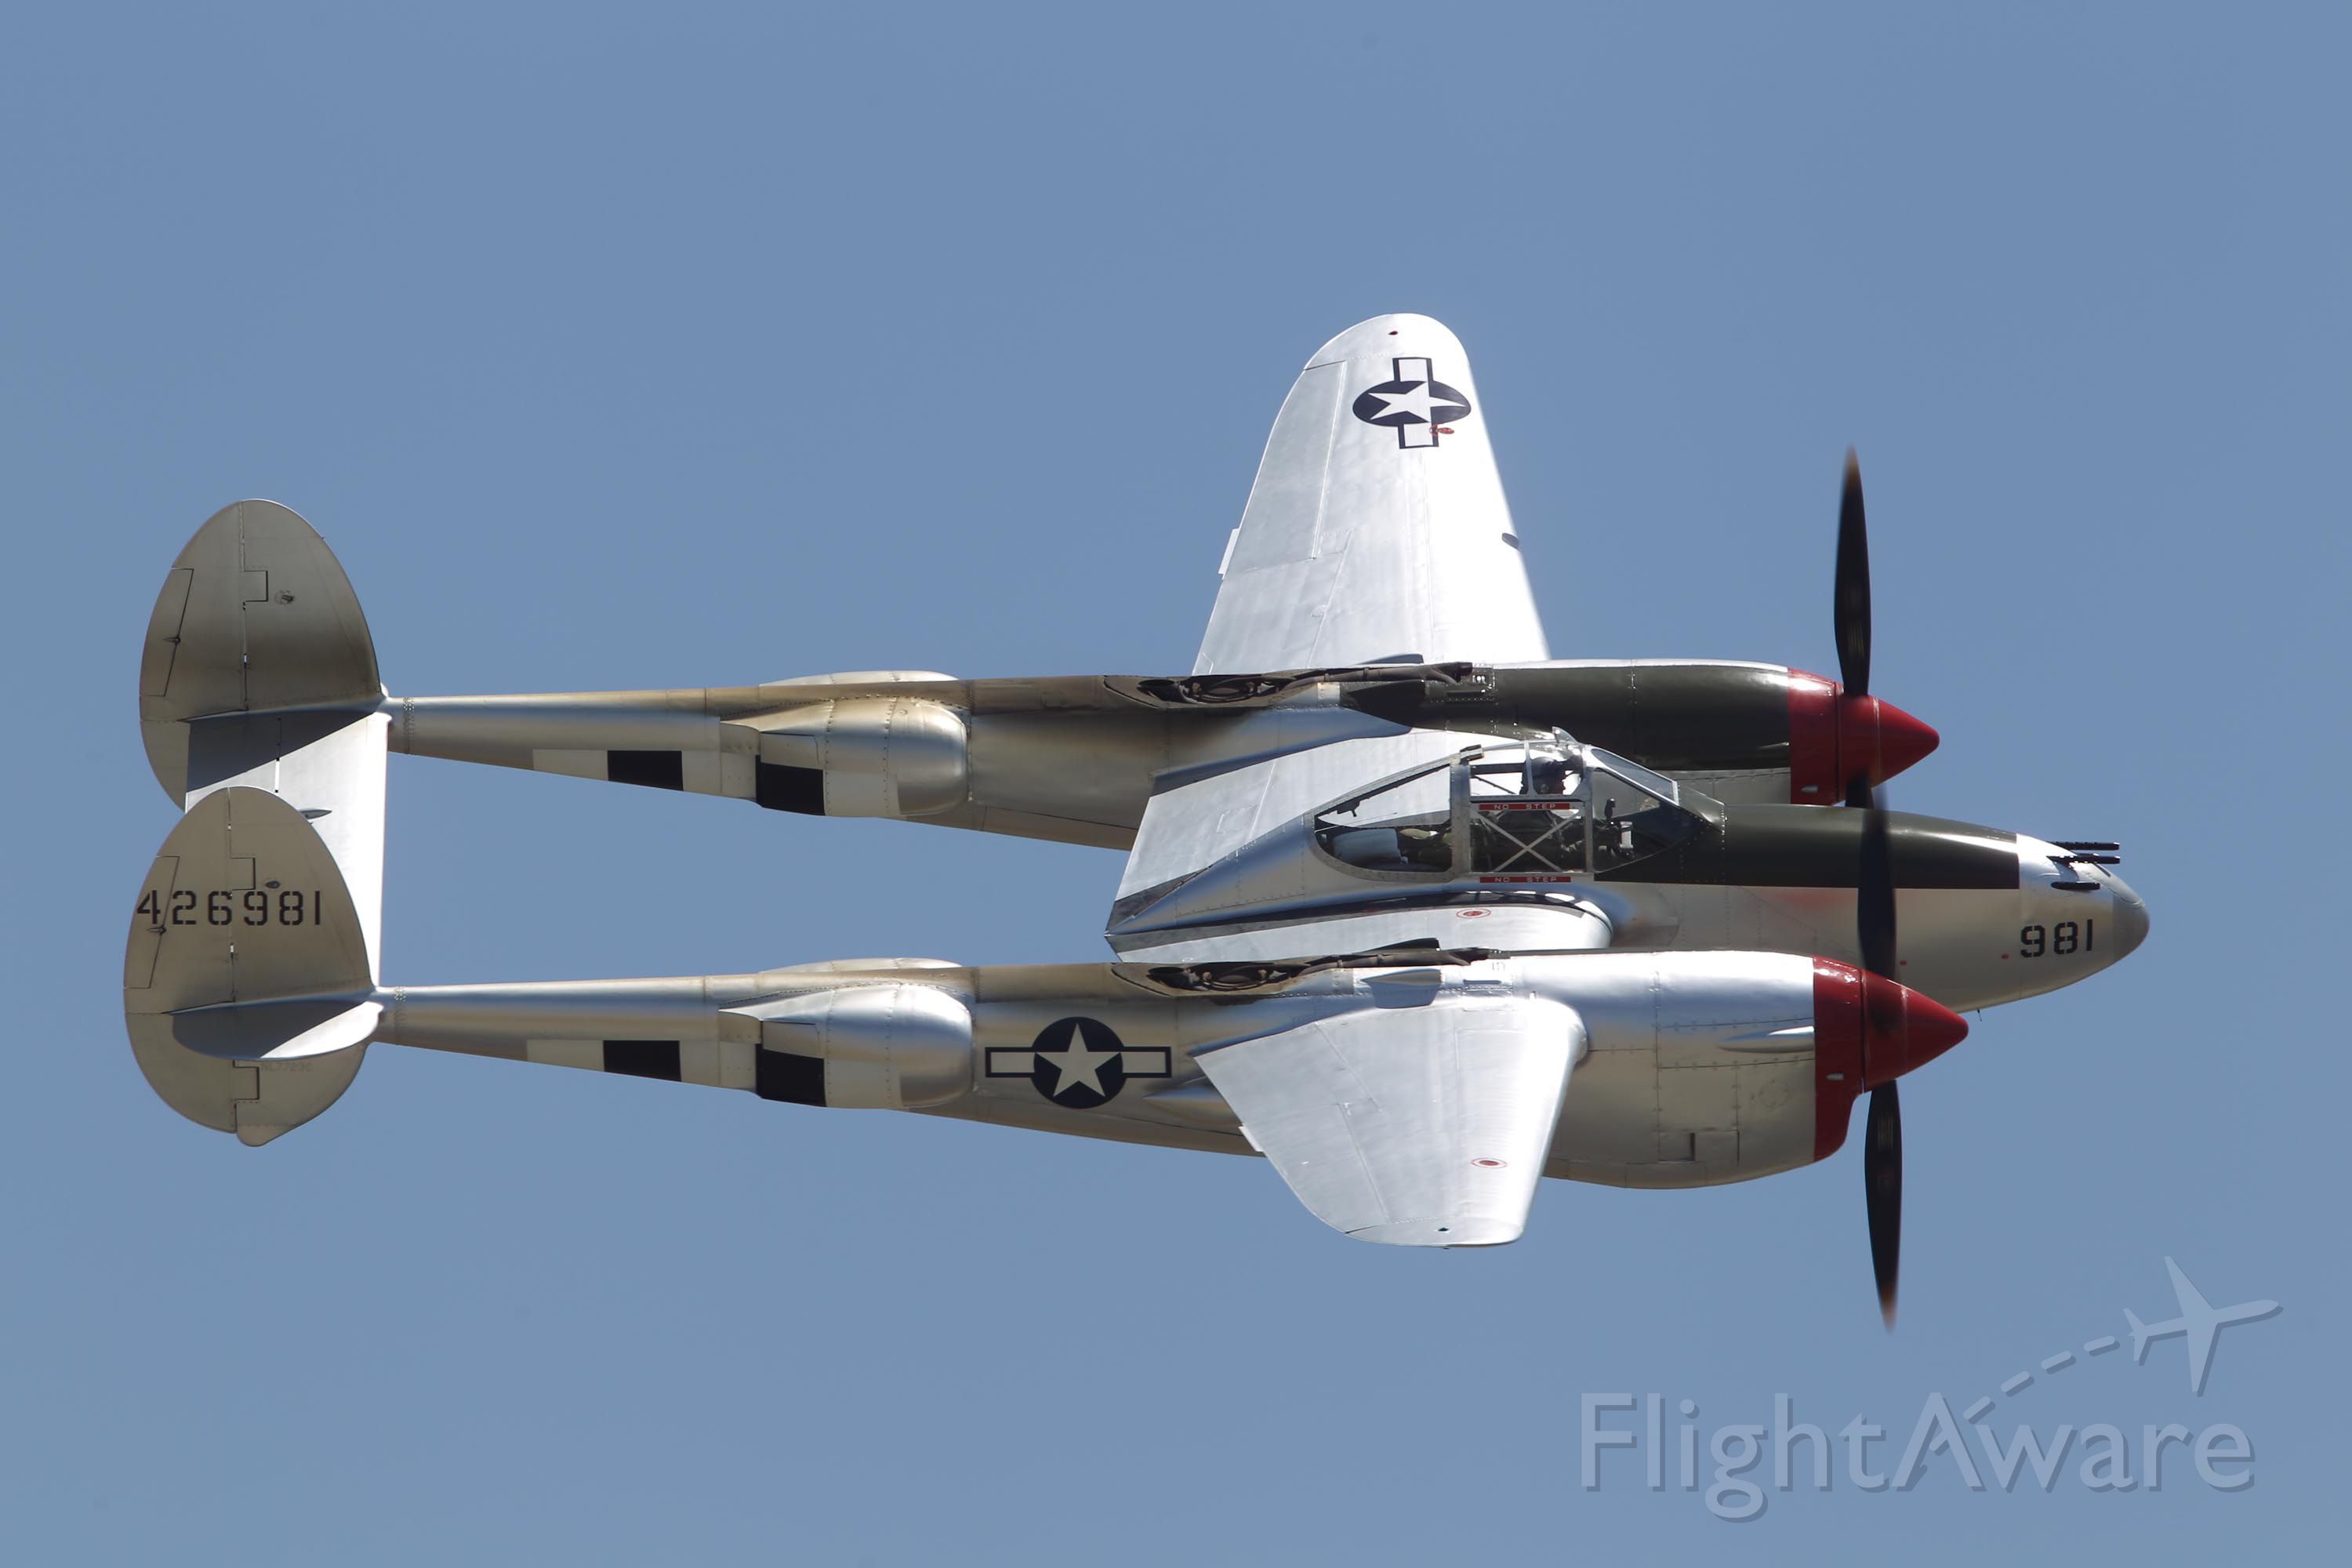 Lockheed P-38 Lightning (42-6981)